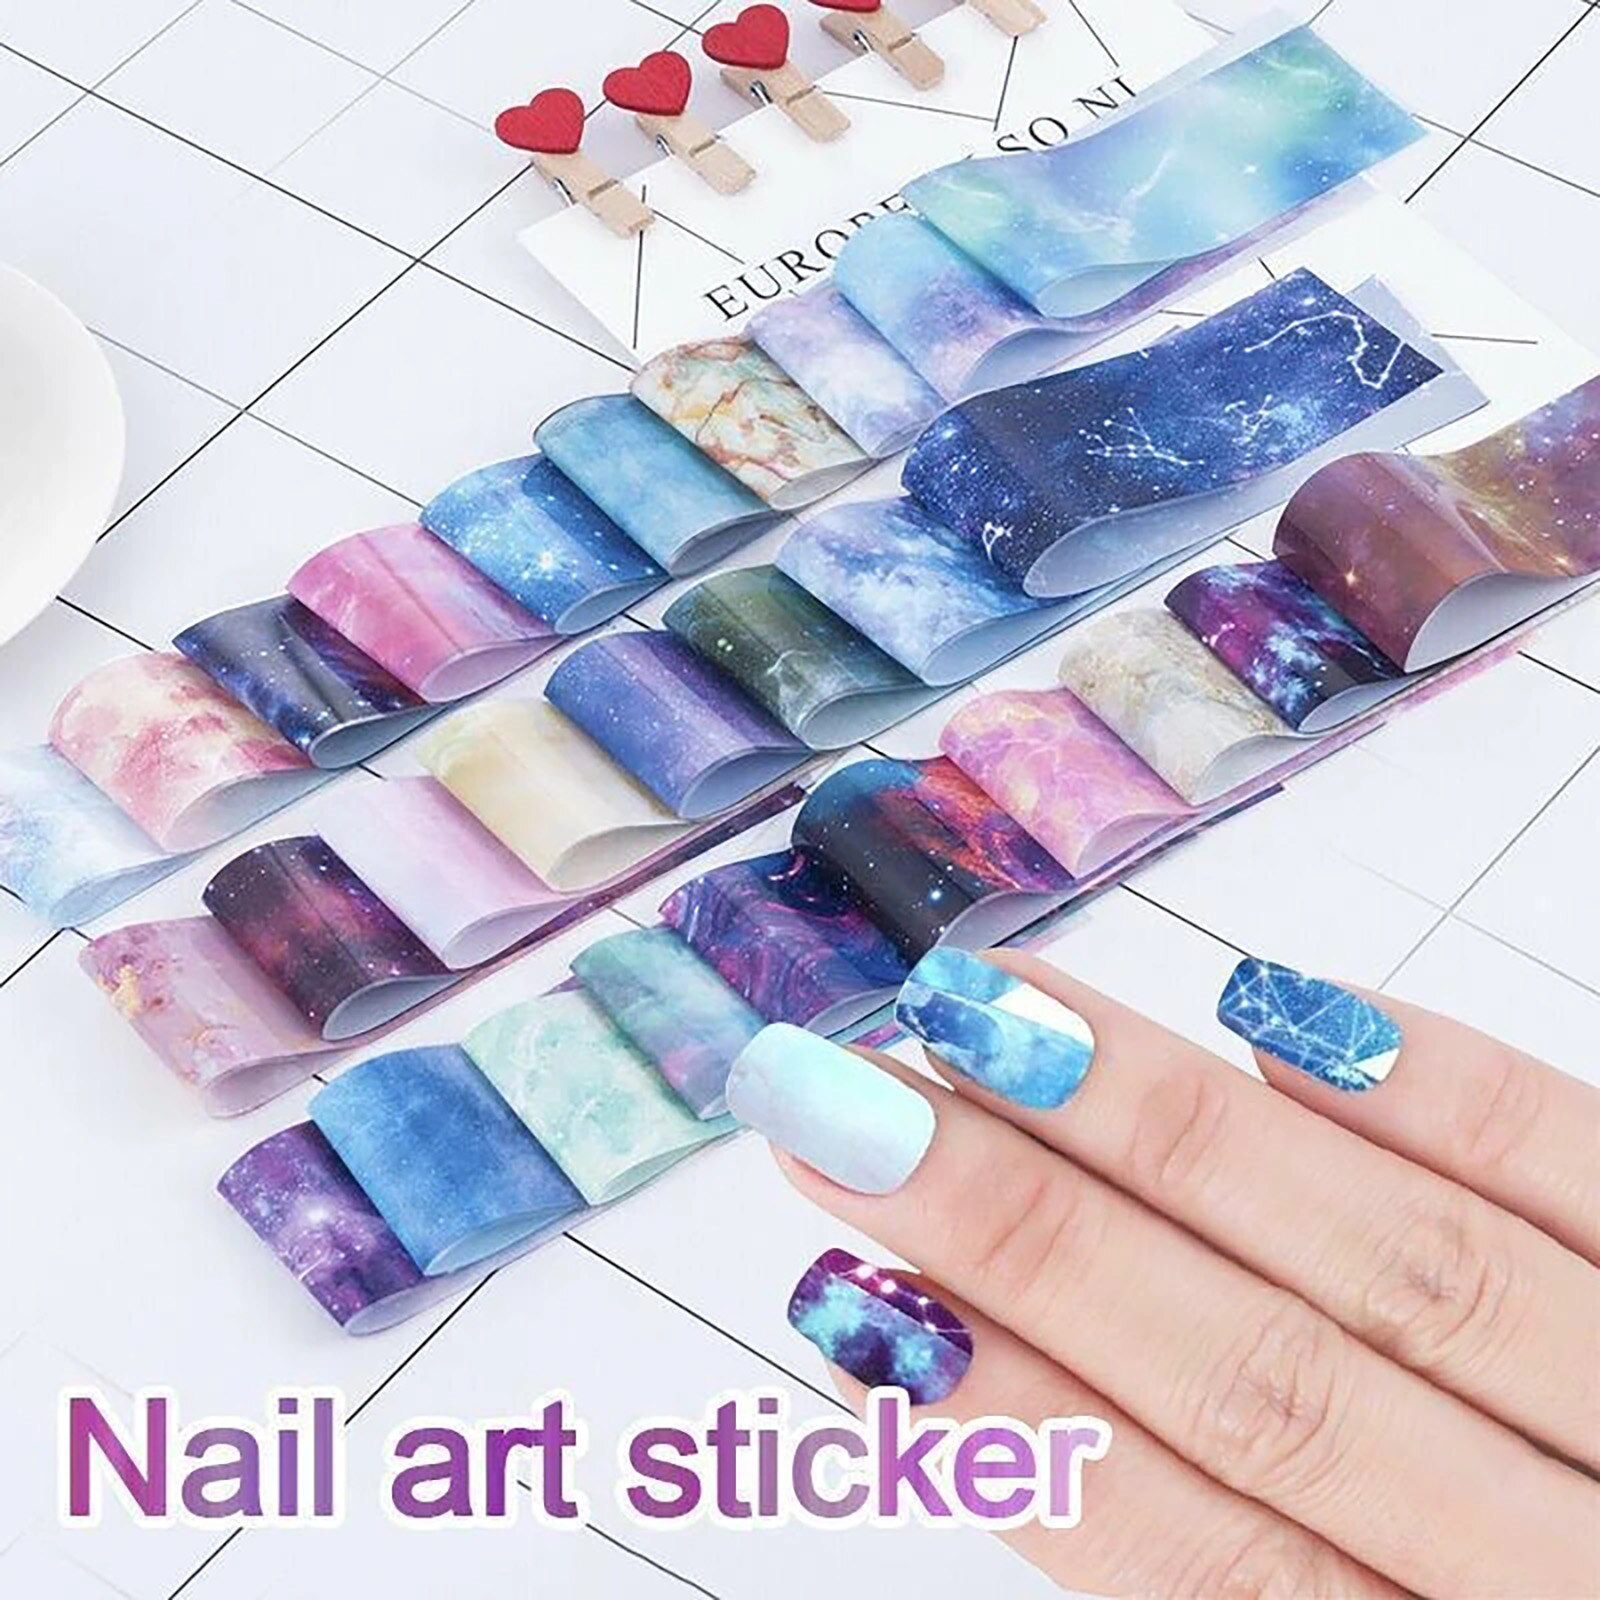 10 Stks/set Galaxy Nail Art Sticker Nail Holografische Sterrenhemel Mix Transfer Folie Nagels Decal Voor Nail Art Decor Manicure # P30